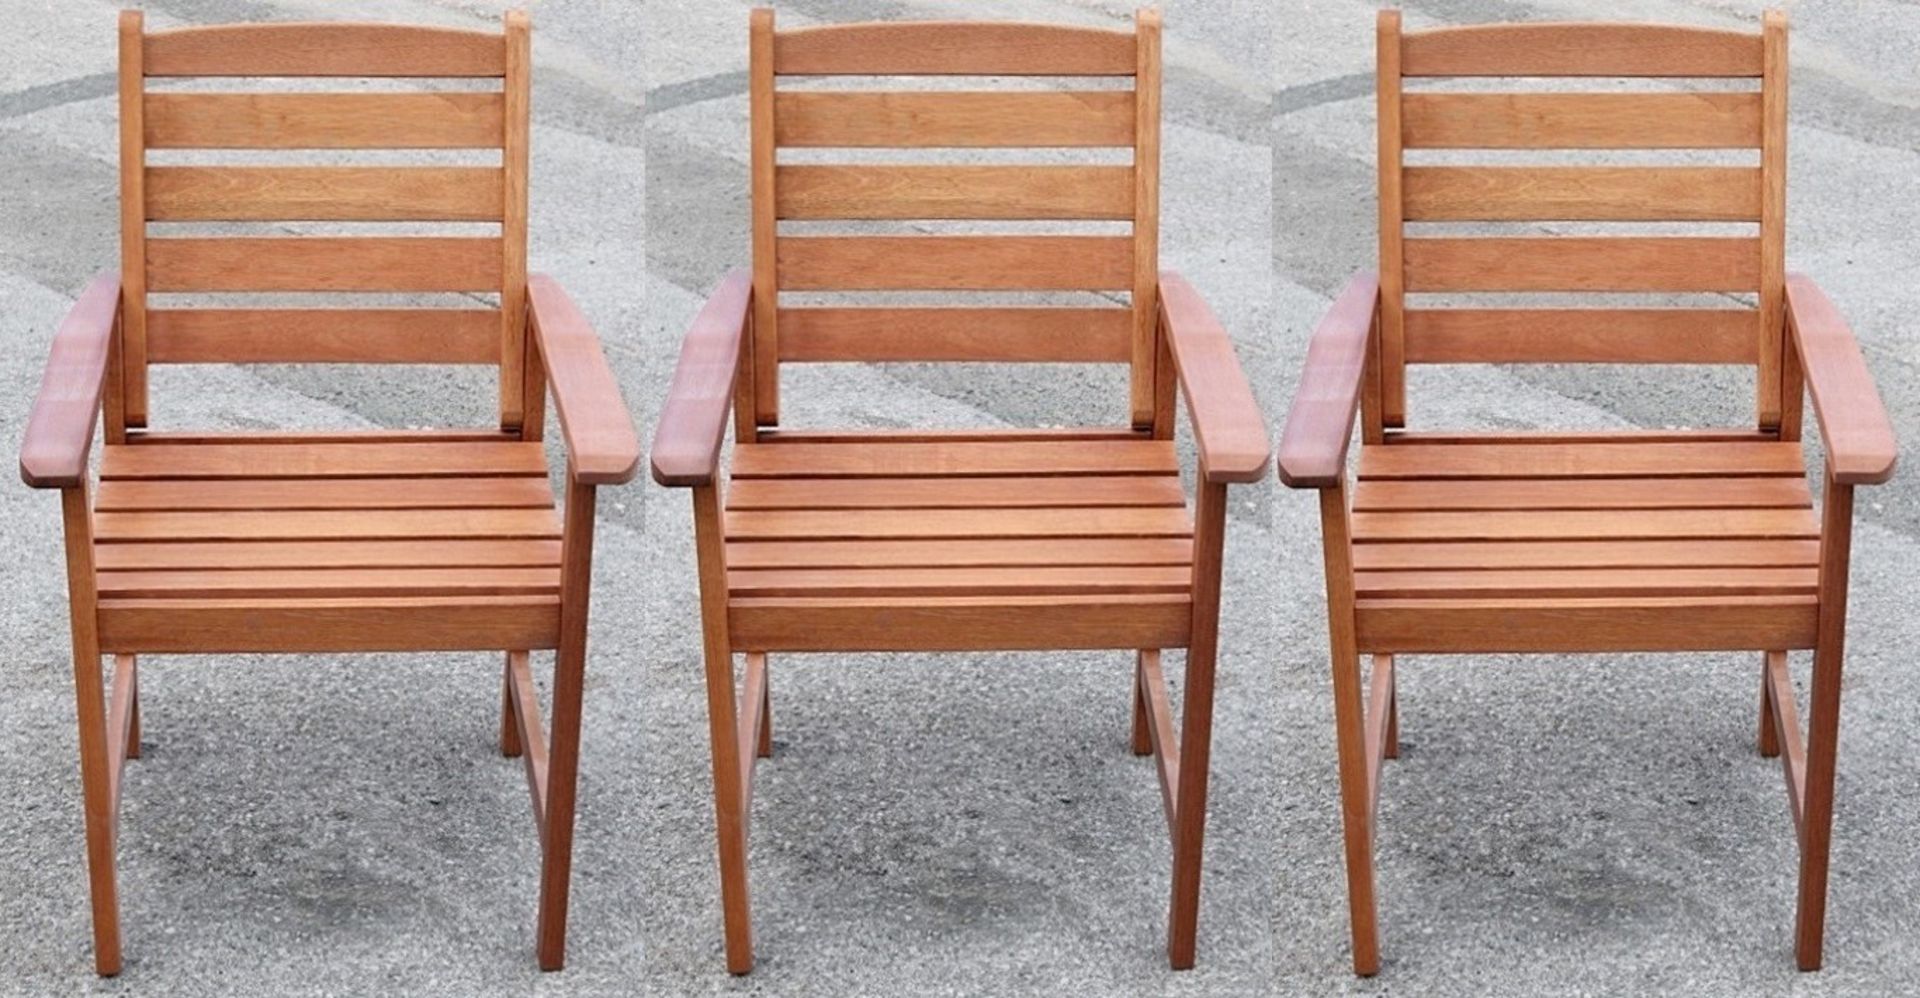 1 x 5-Piece "Macau Nassau" Garden Furniture Set - Includes Bench, Extending Table & 3 x Arm Chairs - - Image 7 of 9